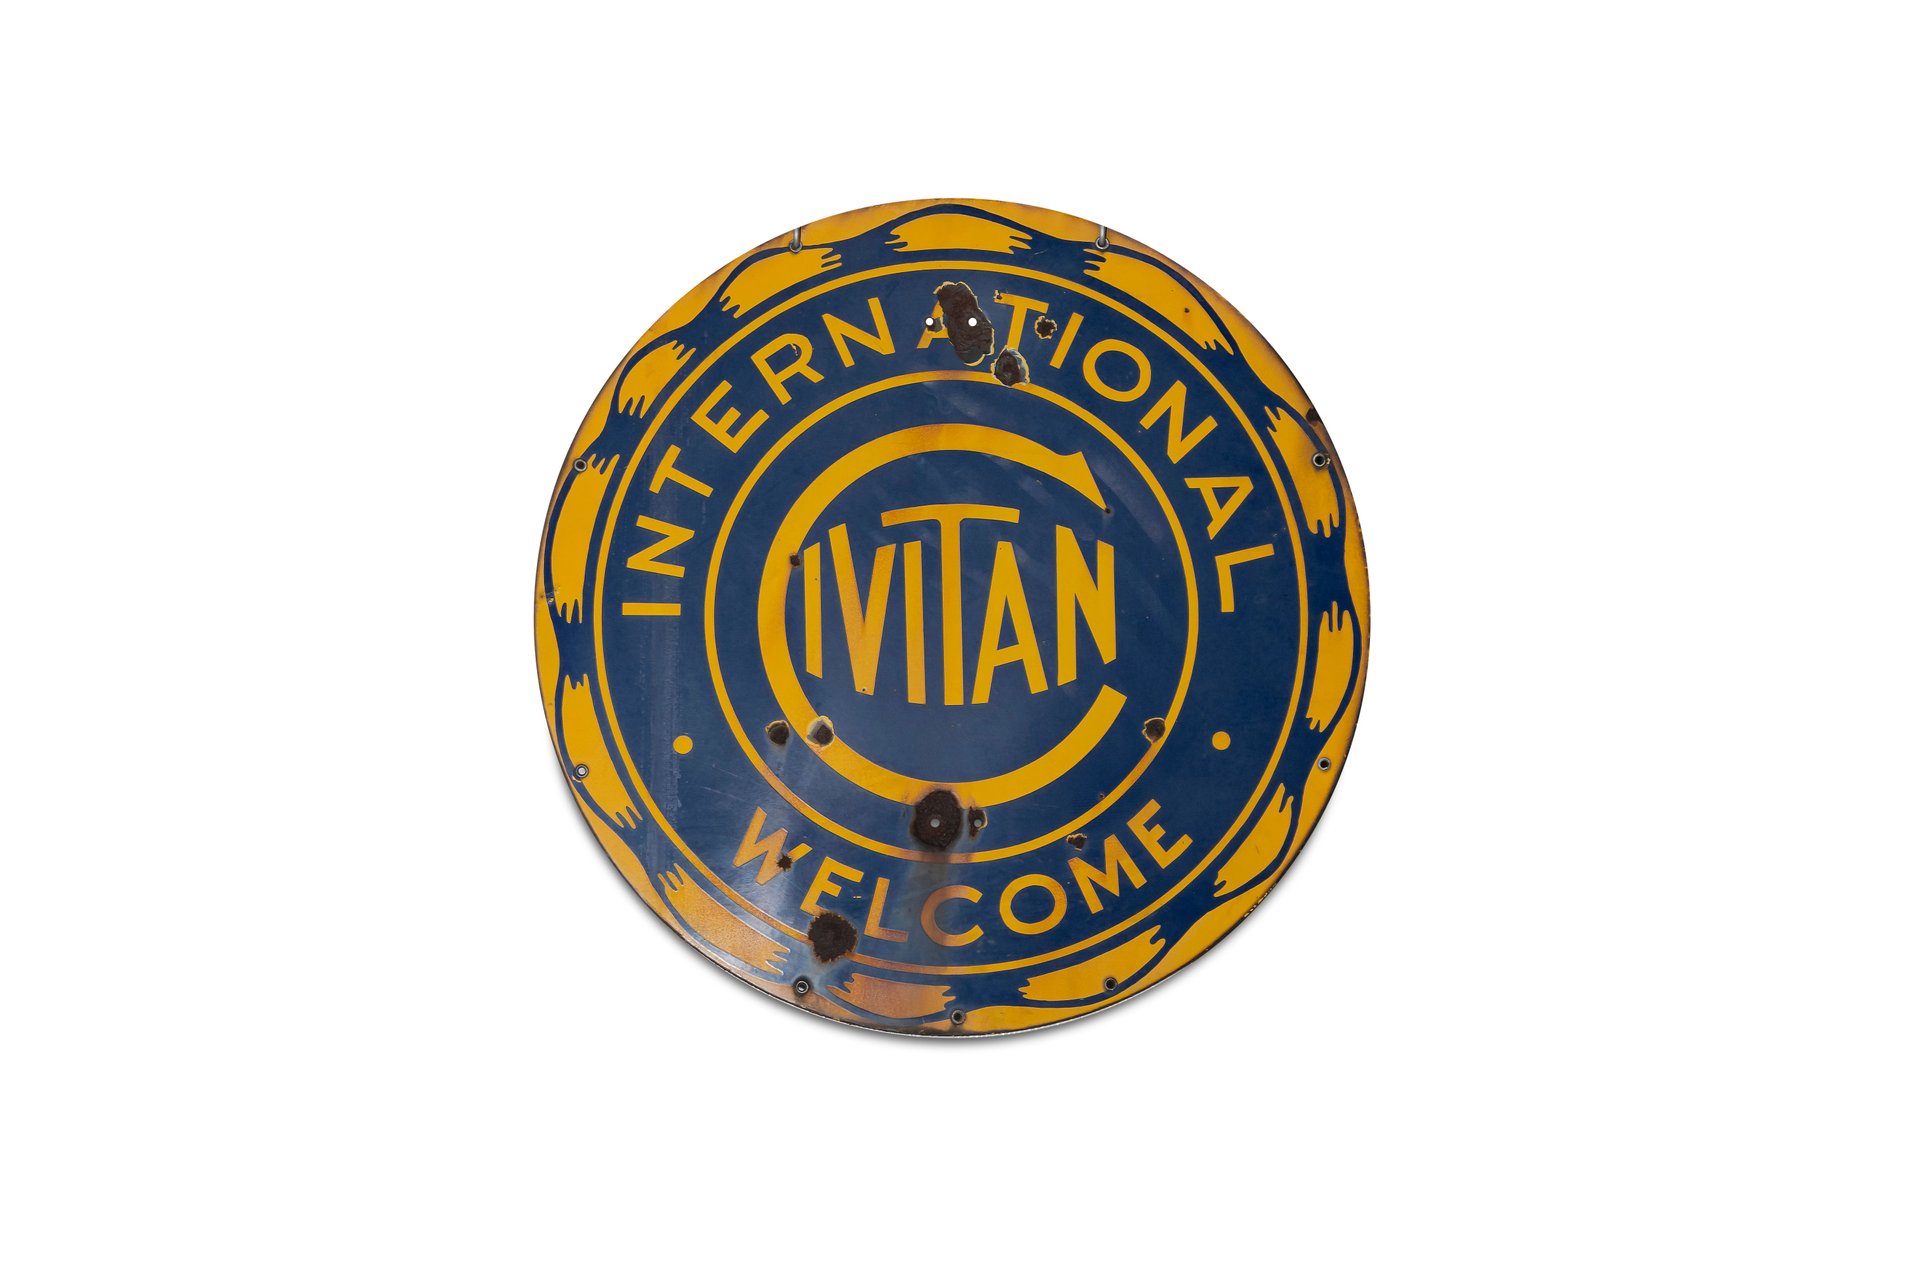 For Sale 'Civitan International Welcome' Porcelain Sign